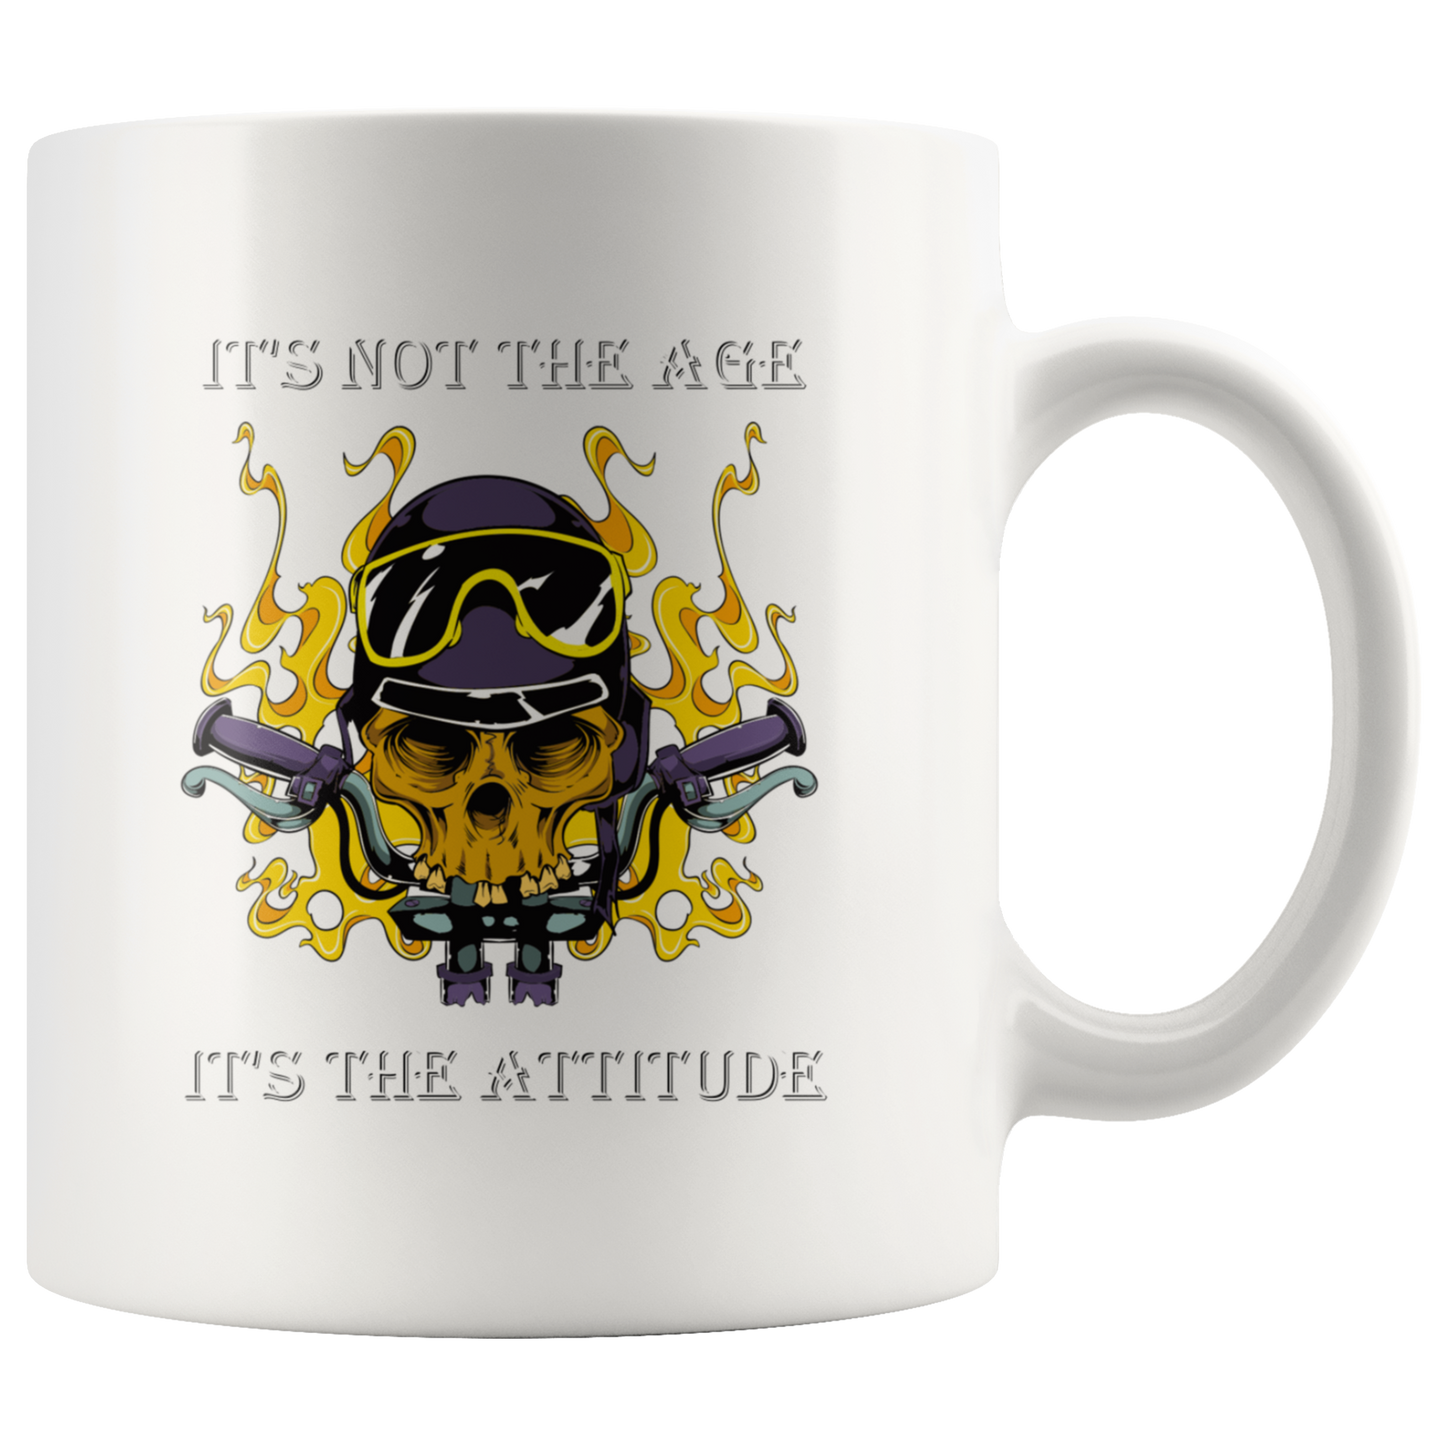 It's The Attitude - Coffee Mug - Classically Styled